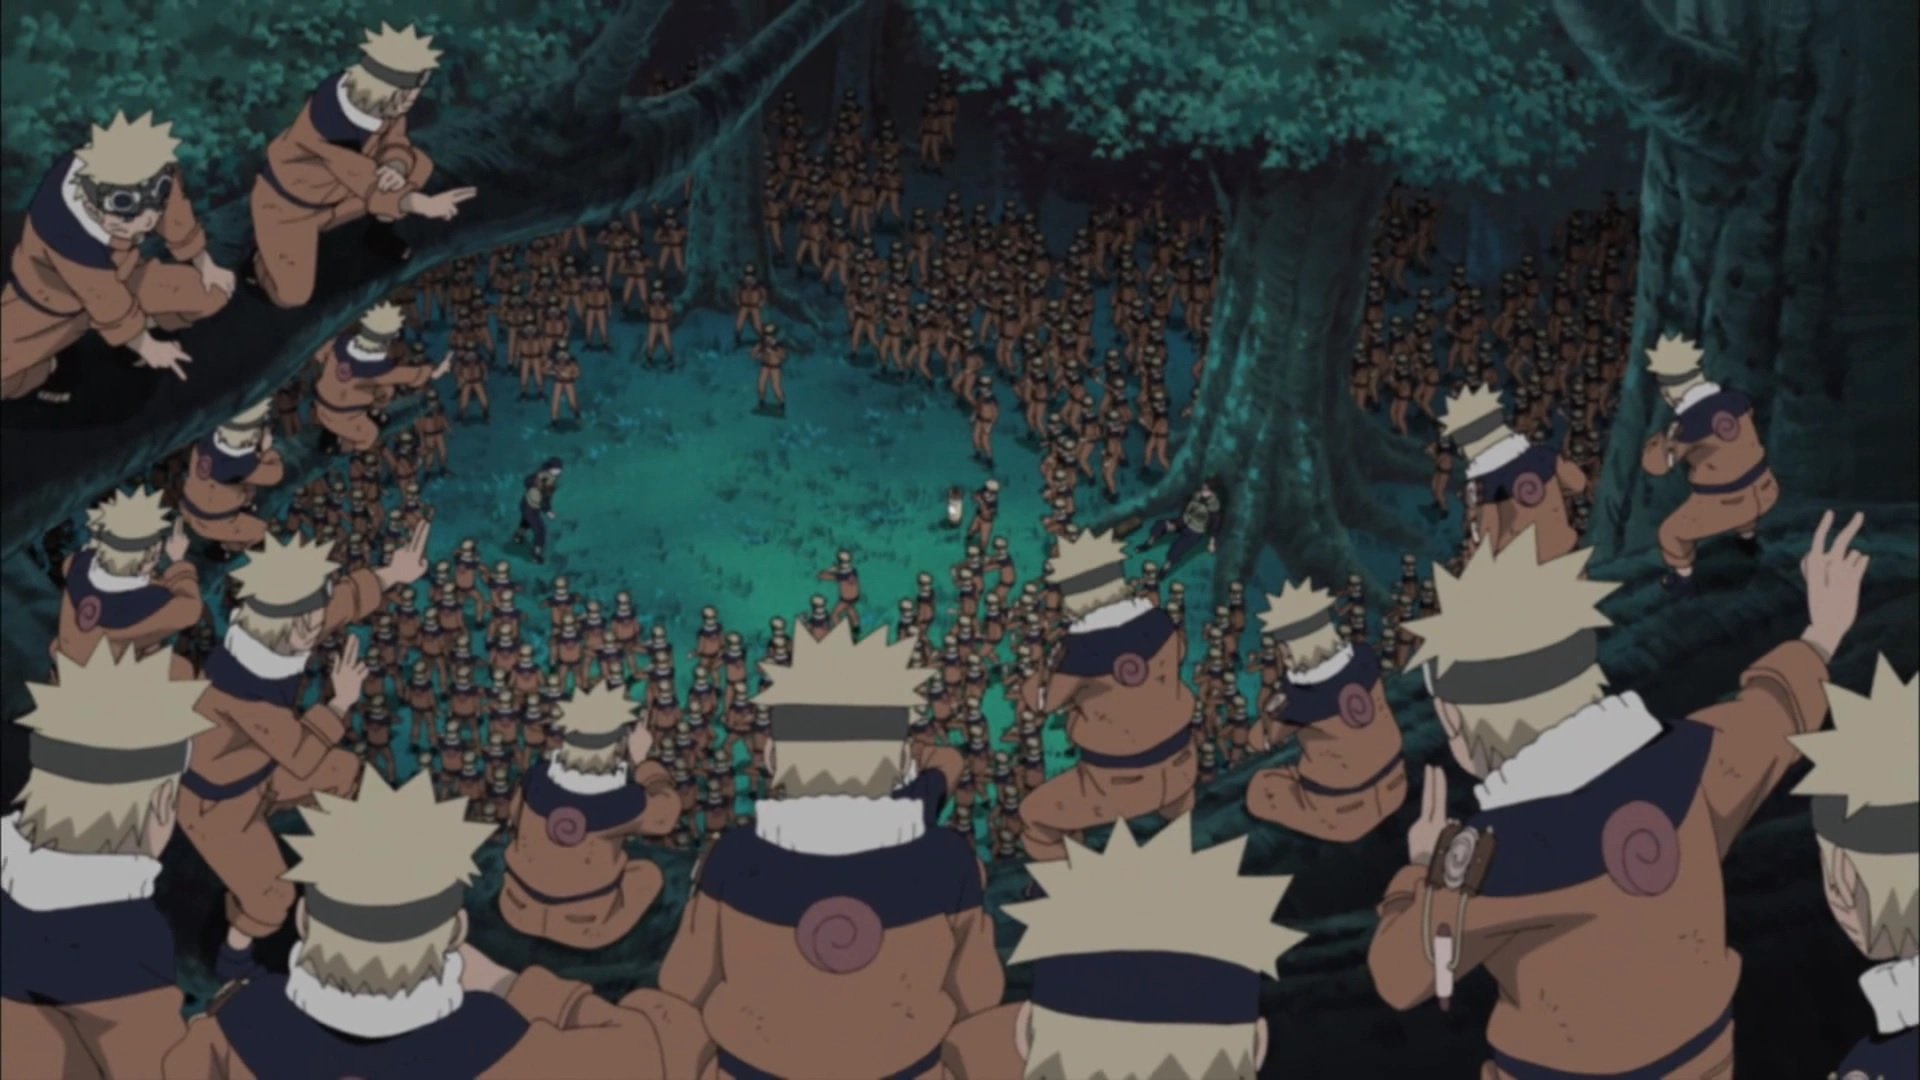 Final de Naruto: Relembre os episódios mais emocionantes do